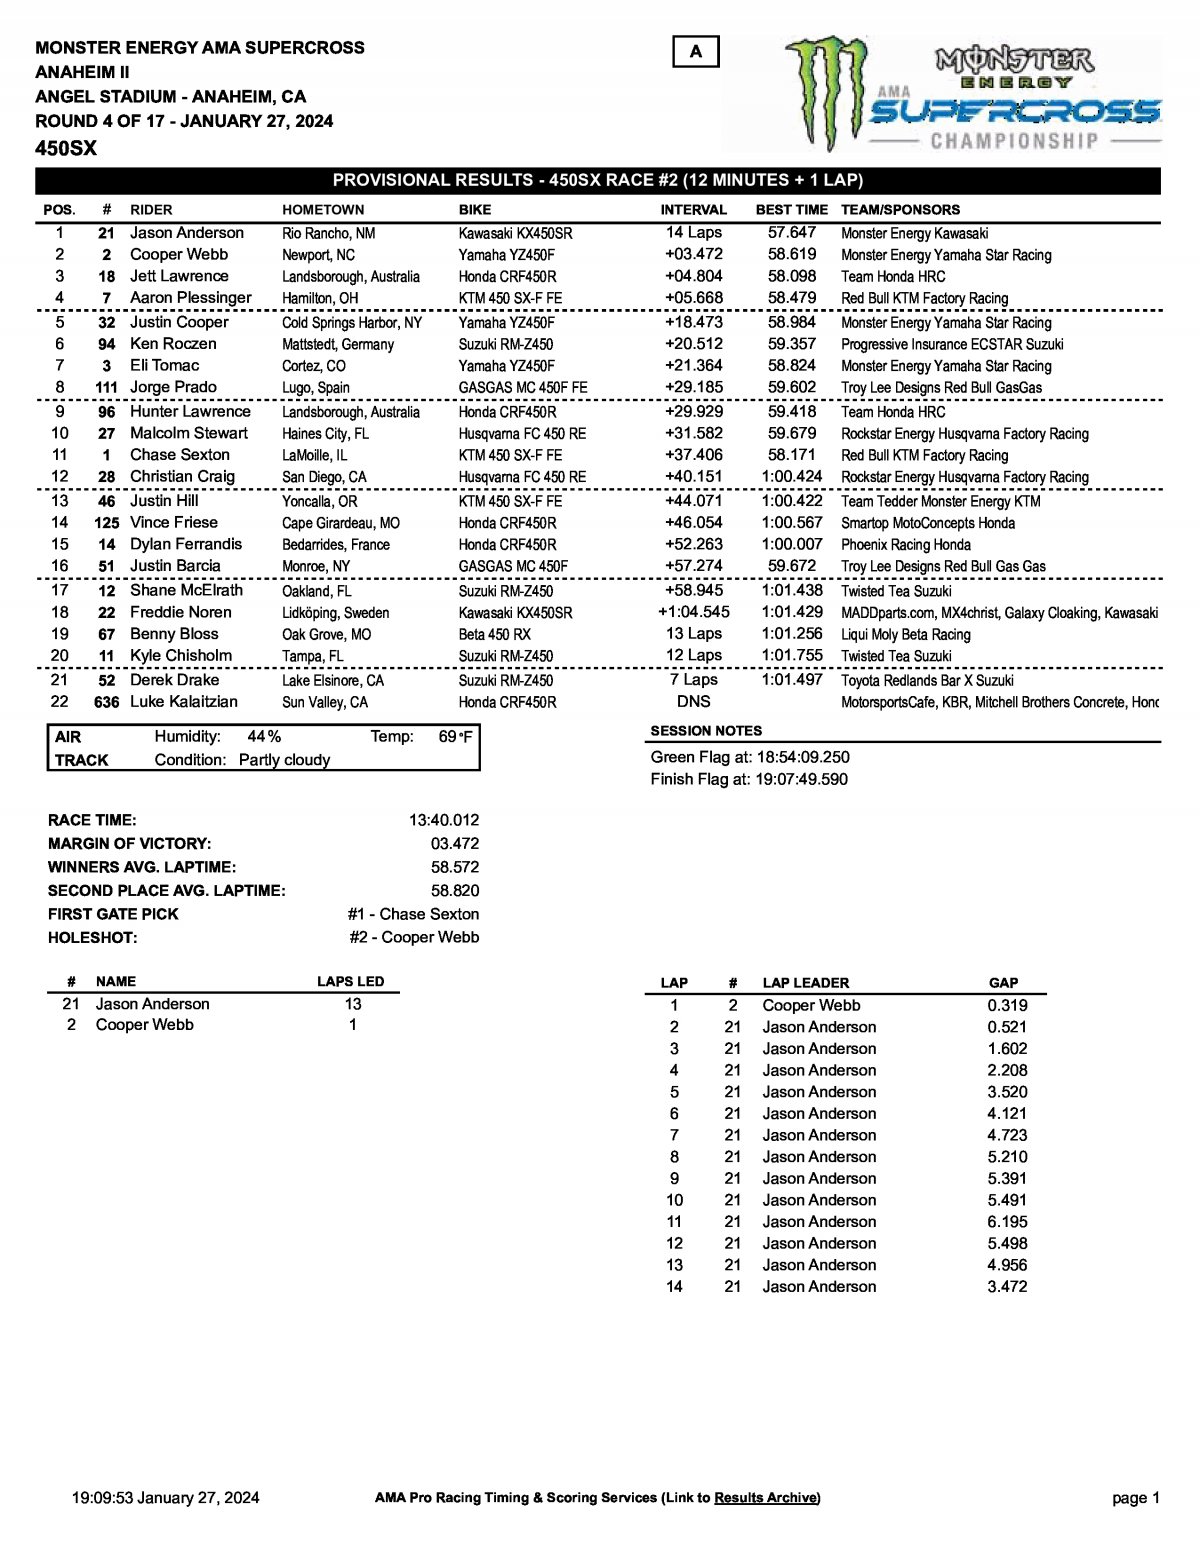 Результаты 2 гонки AMA Supercross Triple Crown Anaheim-2 (27/01/2024)